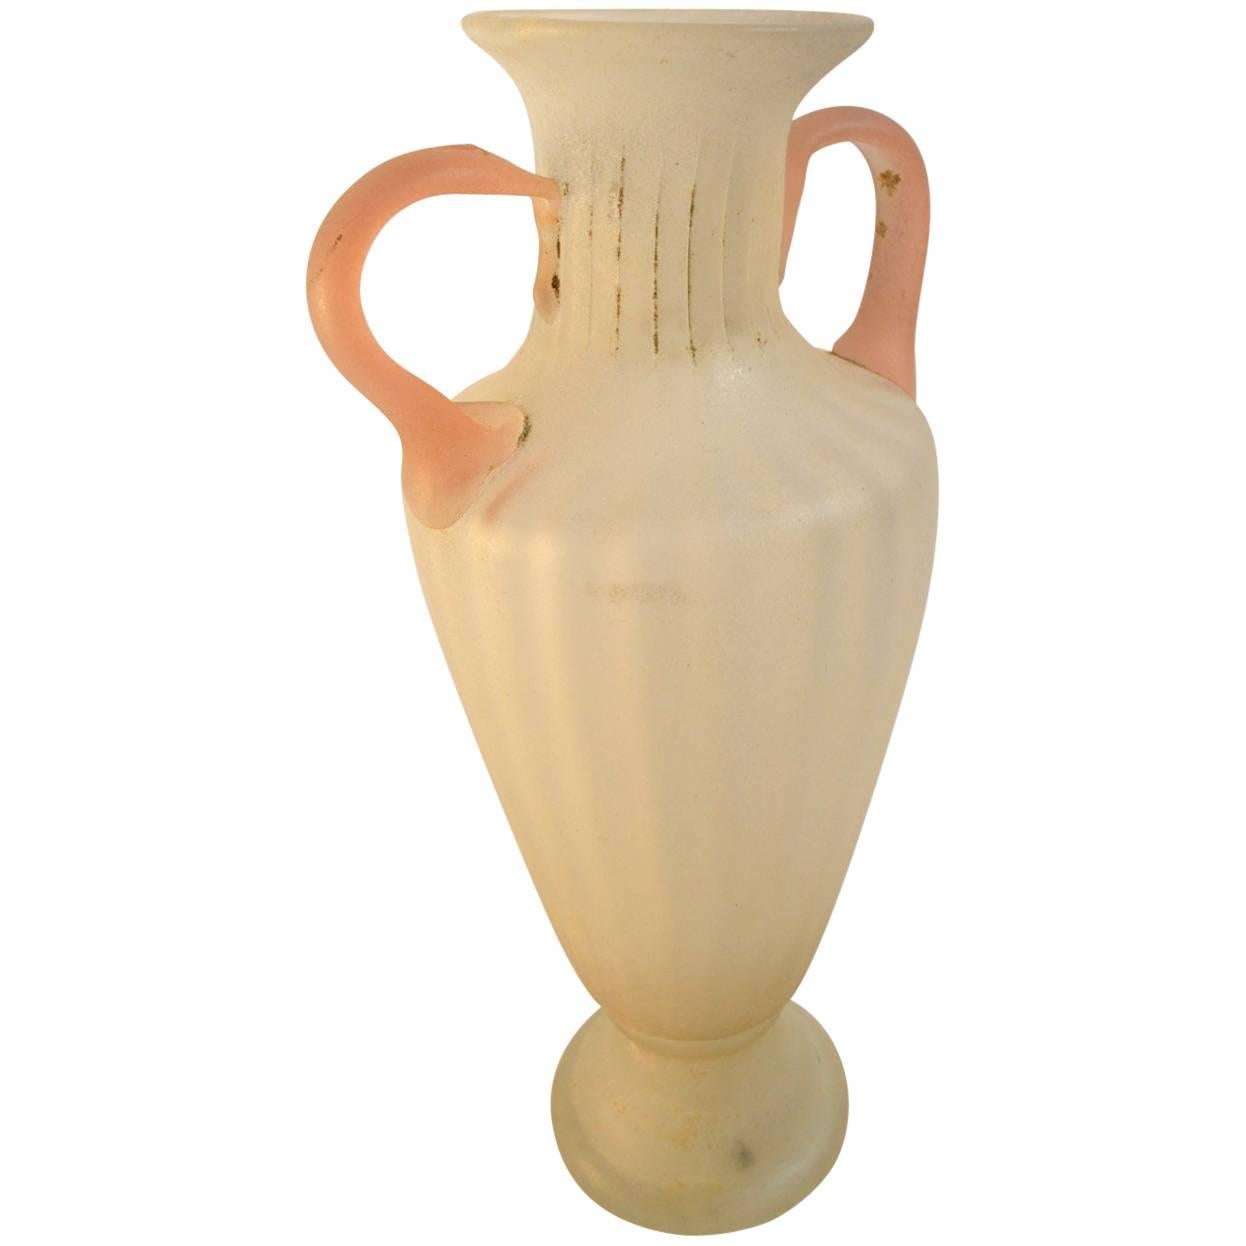 Scavo Vase by Cenedese